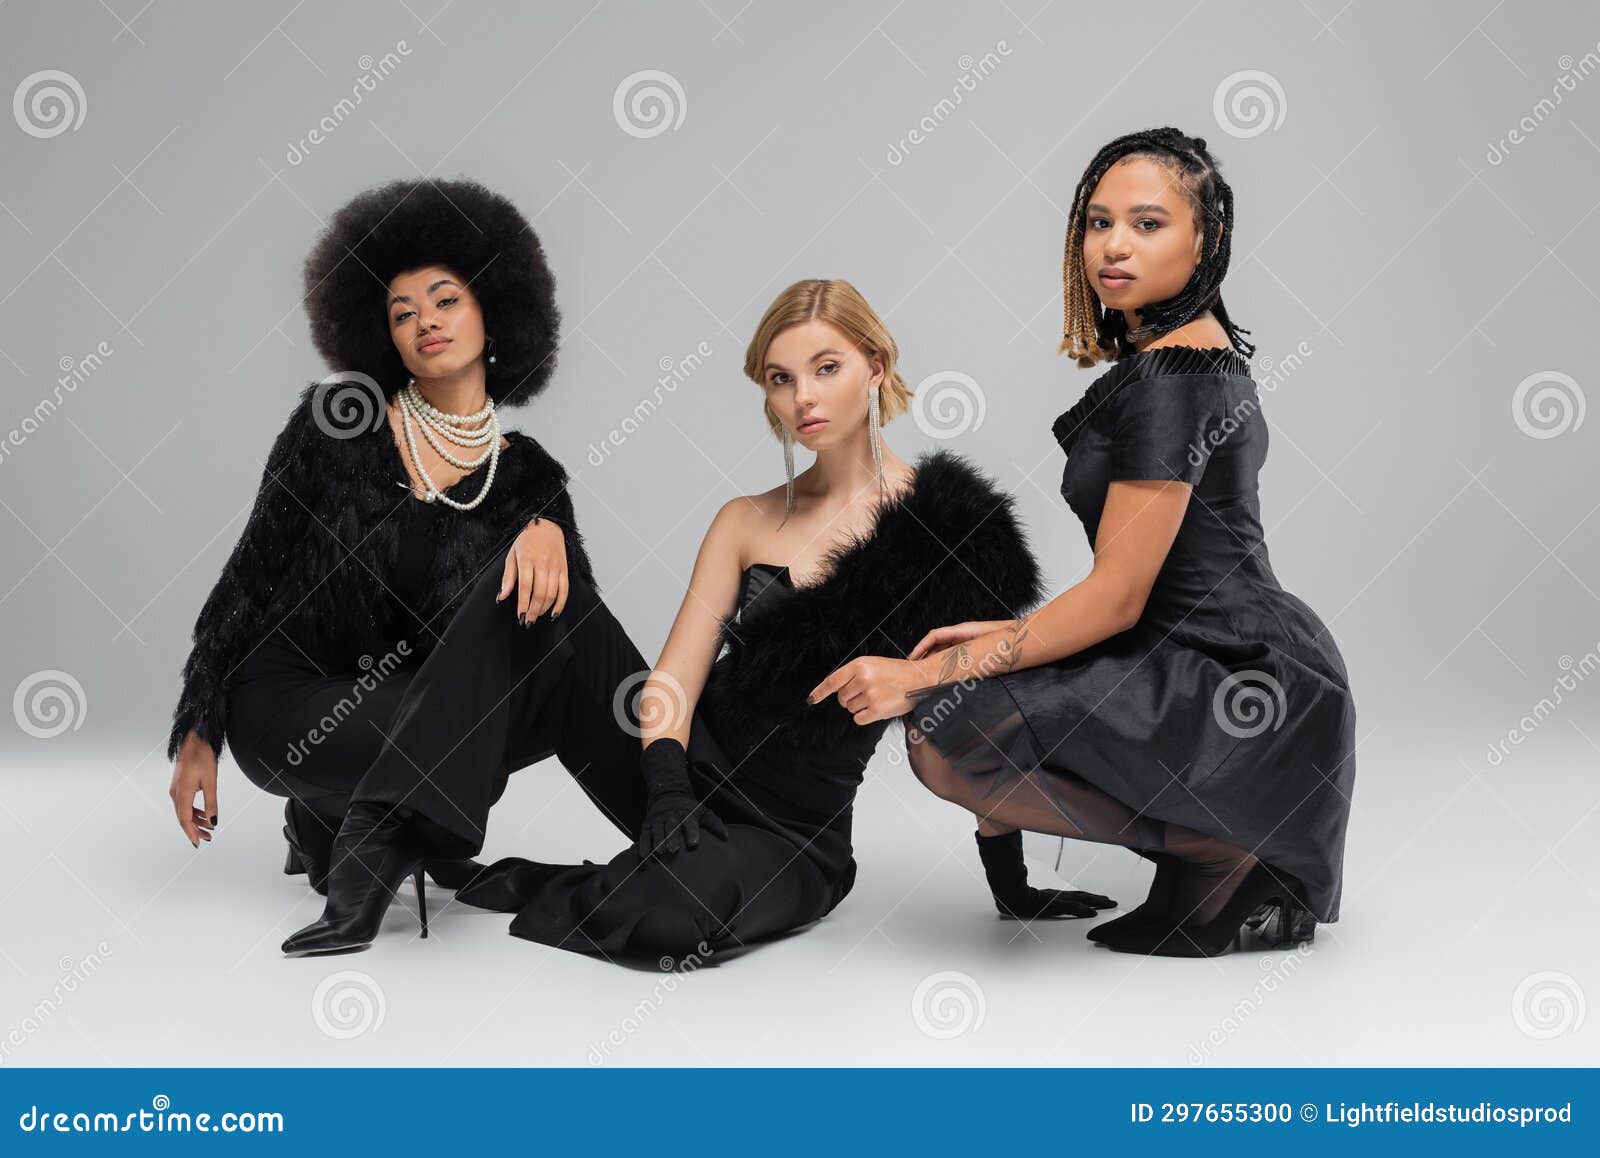 multiethnic fashionistas in black elegant wear